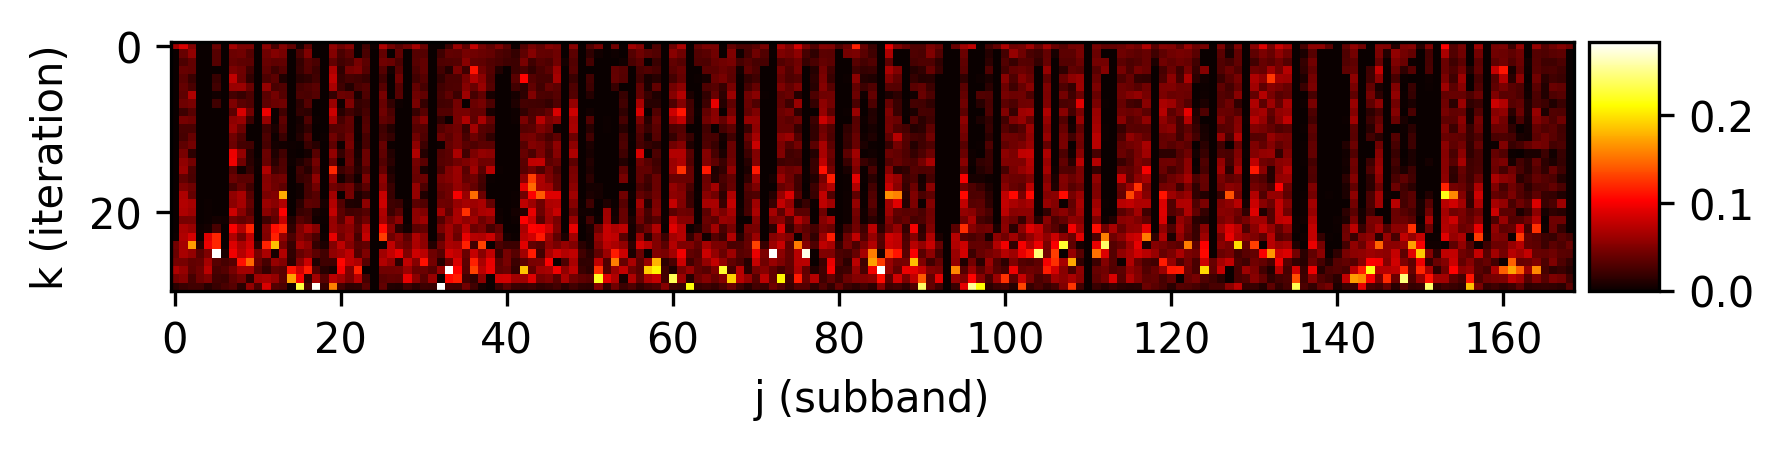  CDLNet-B trained on noise-level range [20,30]. Thresholds do not vary with noise-level.